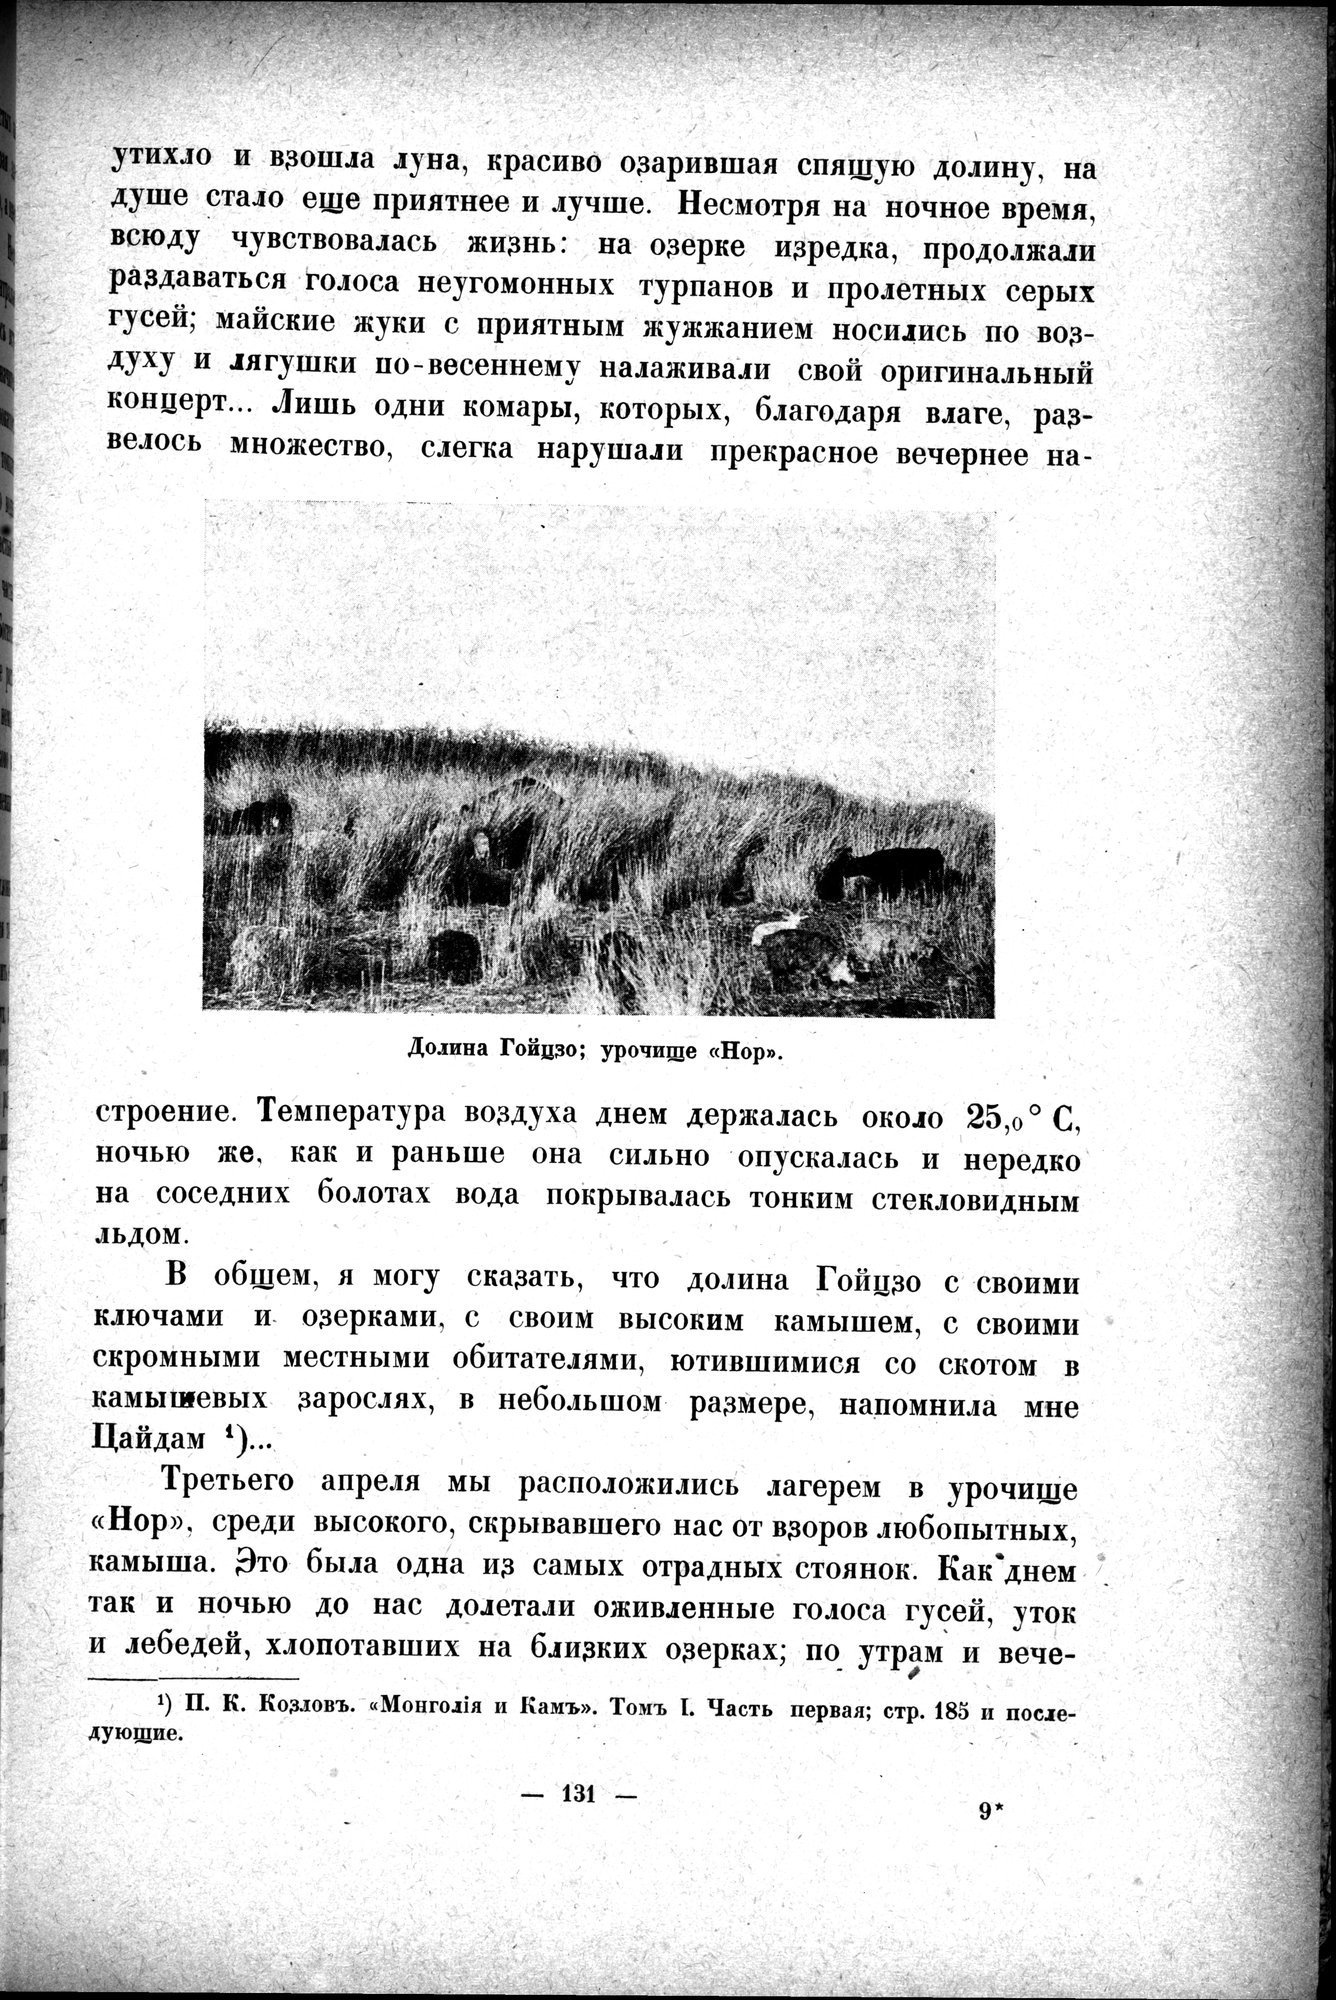 Mongoliya i Amdo i mertby gorod Khara-Khoto : vol.1 / Page 159 (Grayscale High Resolution Image)